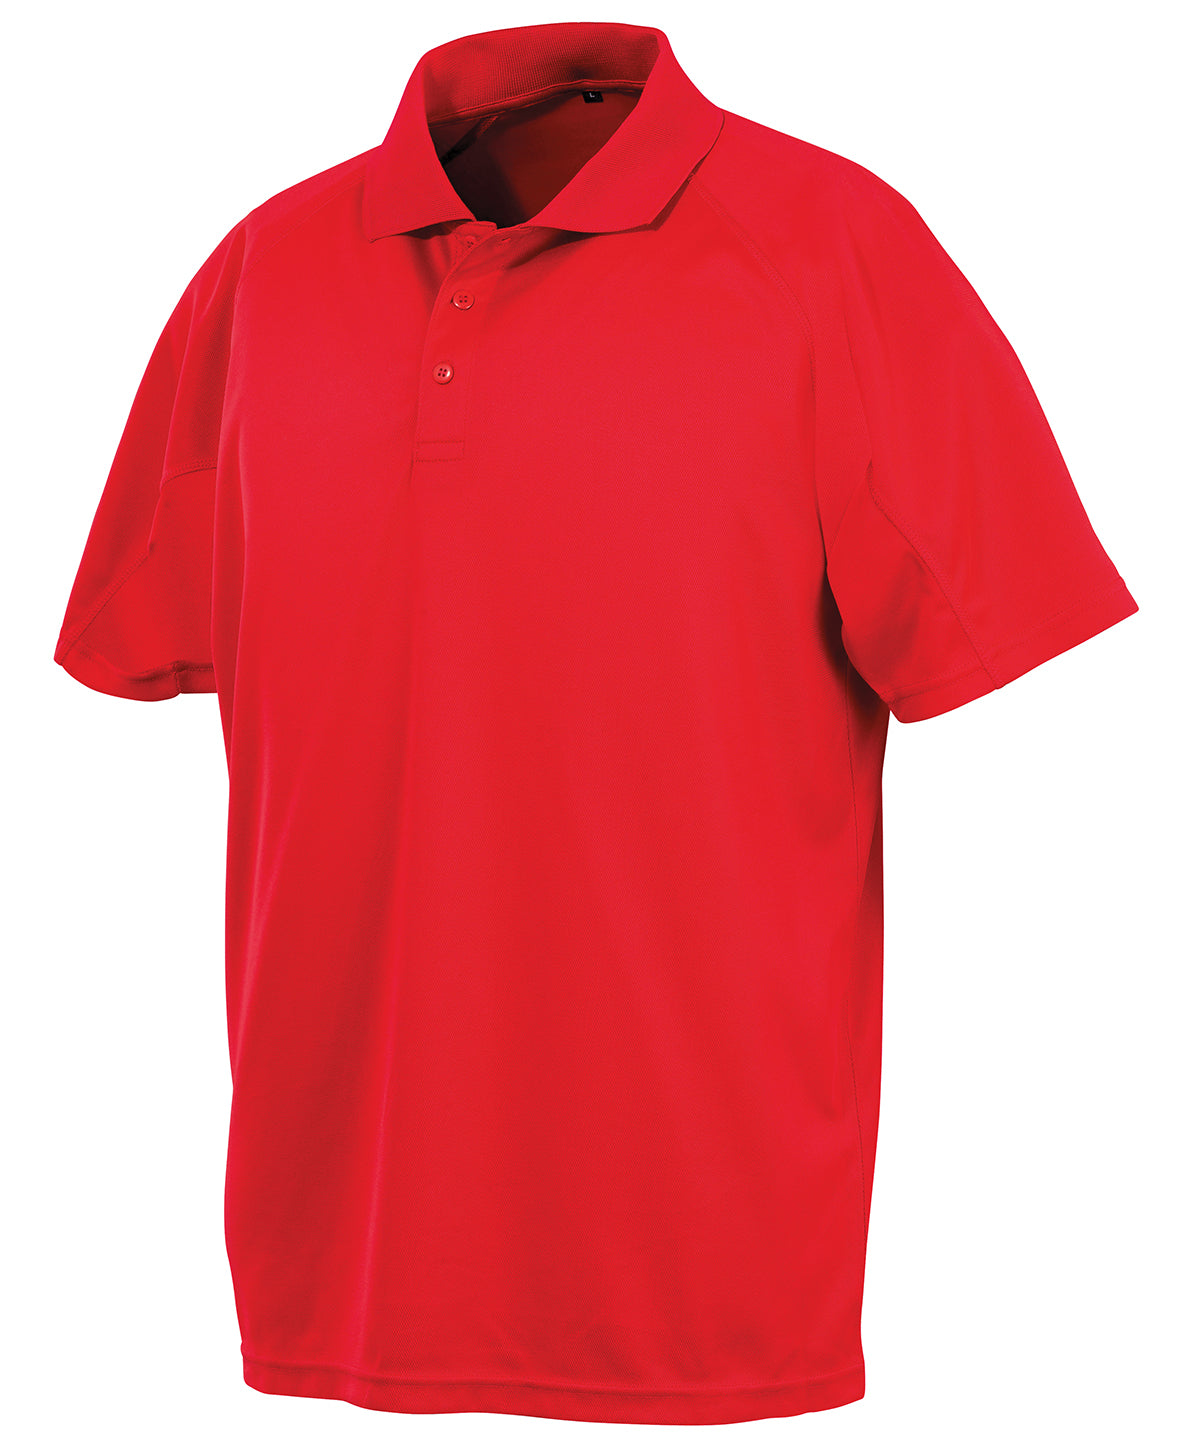 Spiro Performance Aircool Polo Shirt Red